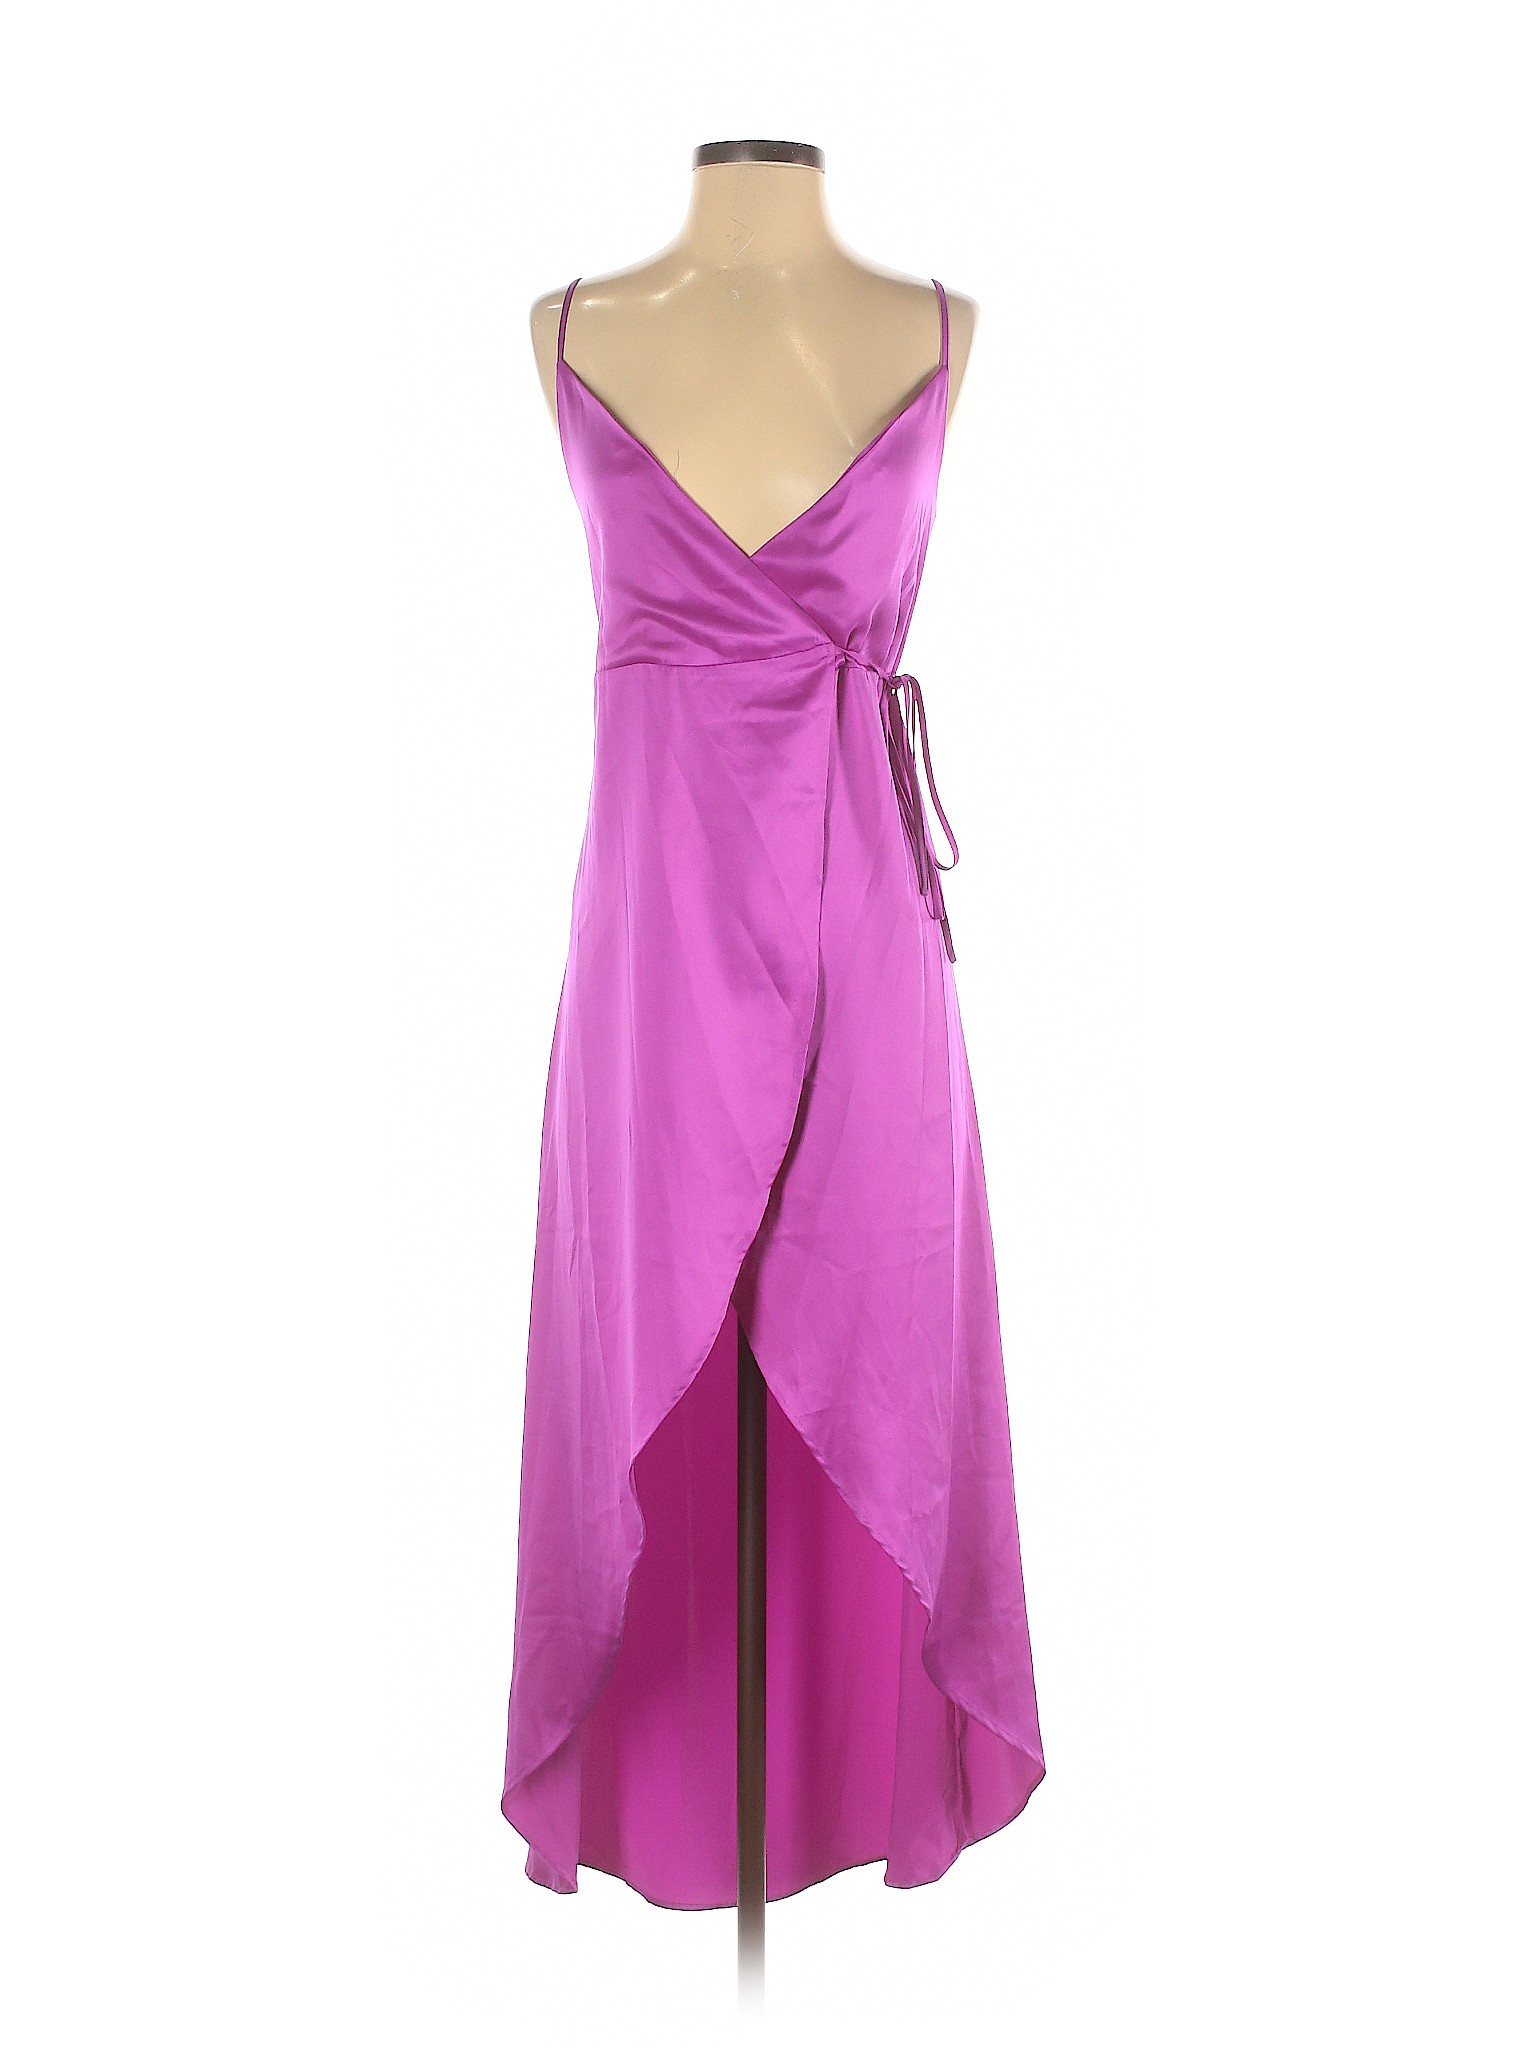 NWT Forever 21 Women Purple Cocktail Dress XS | eBay